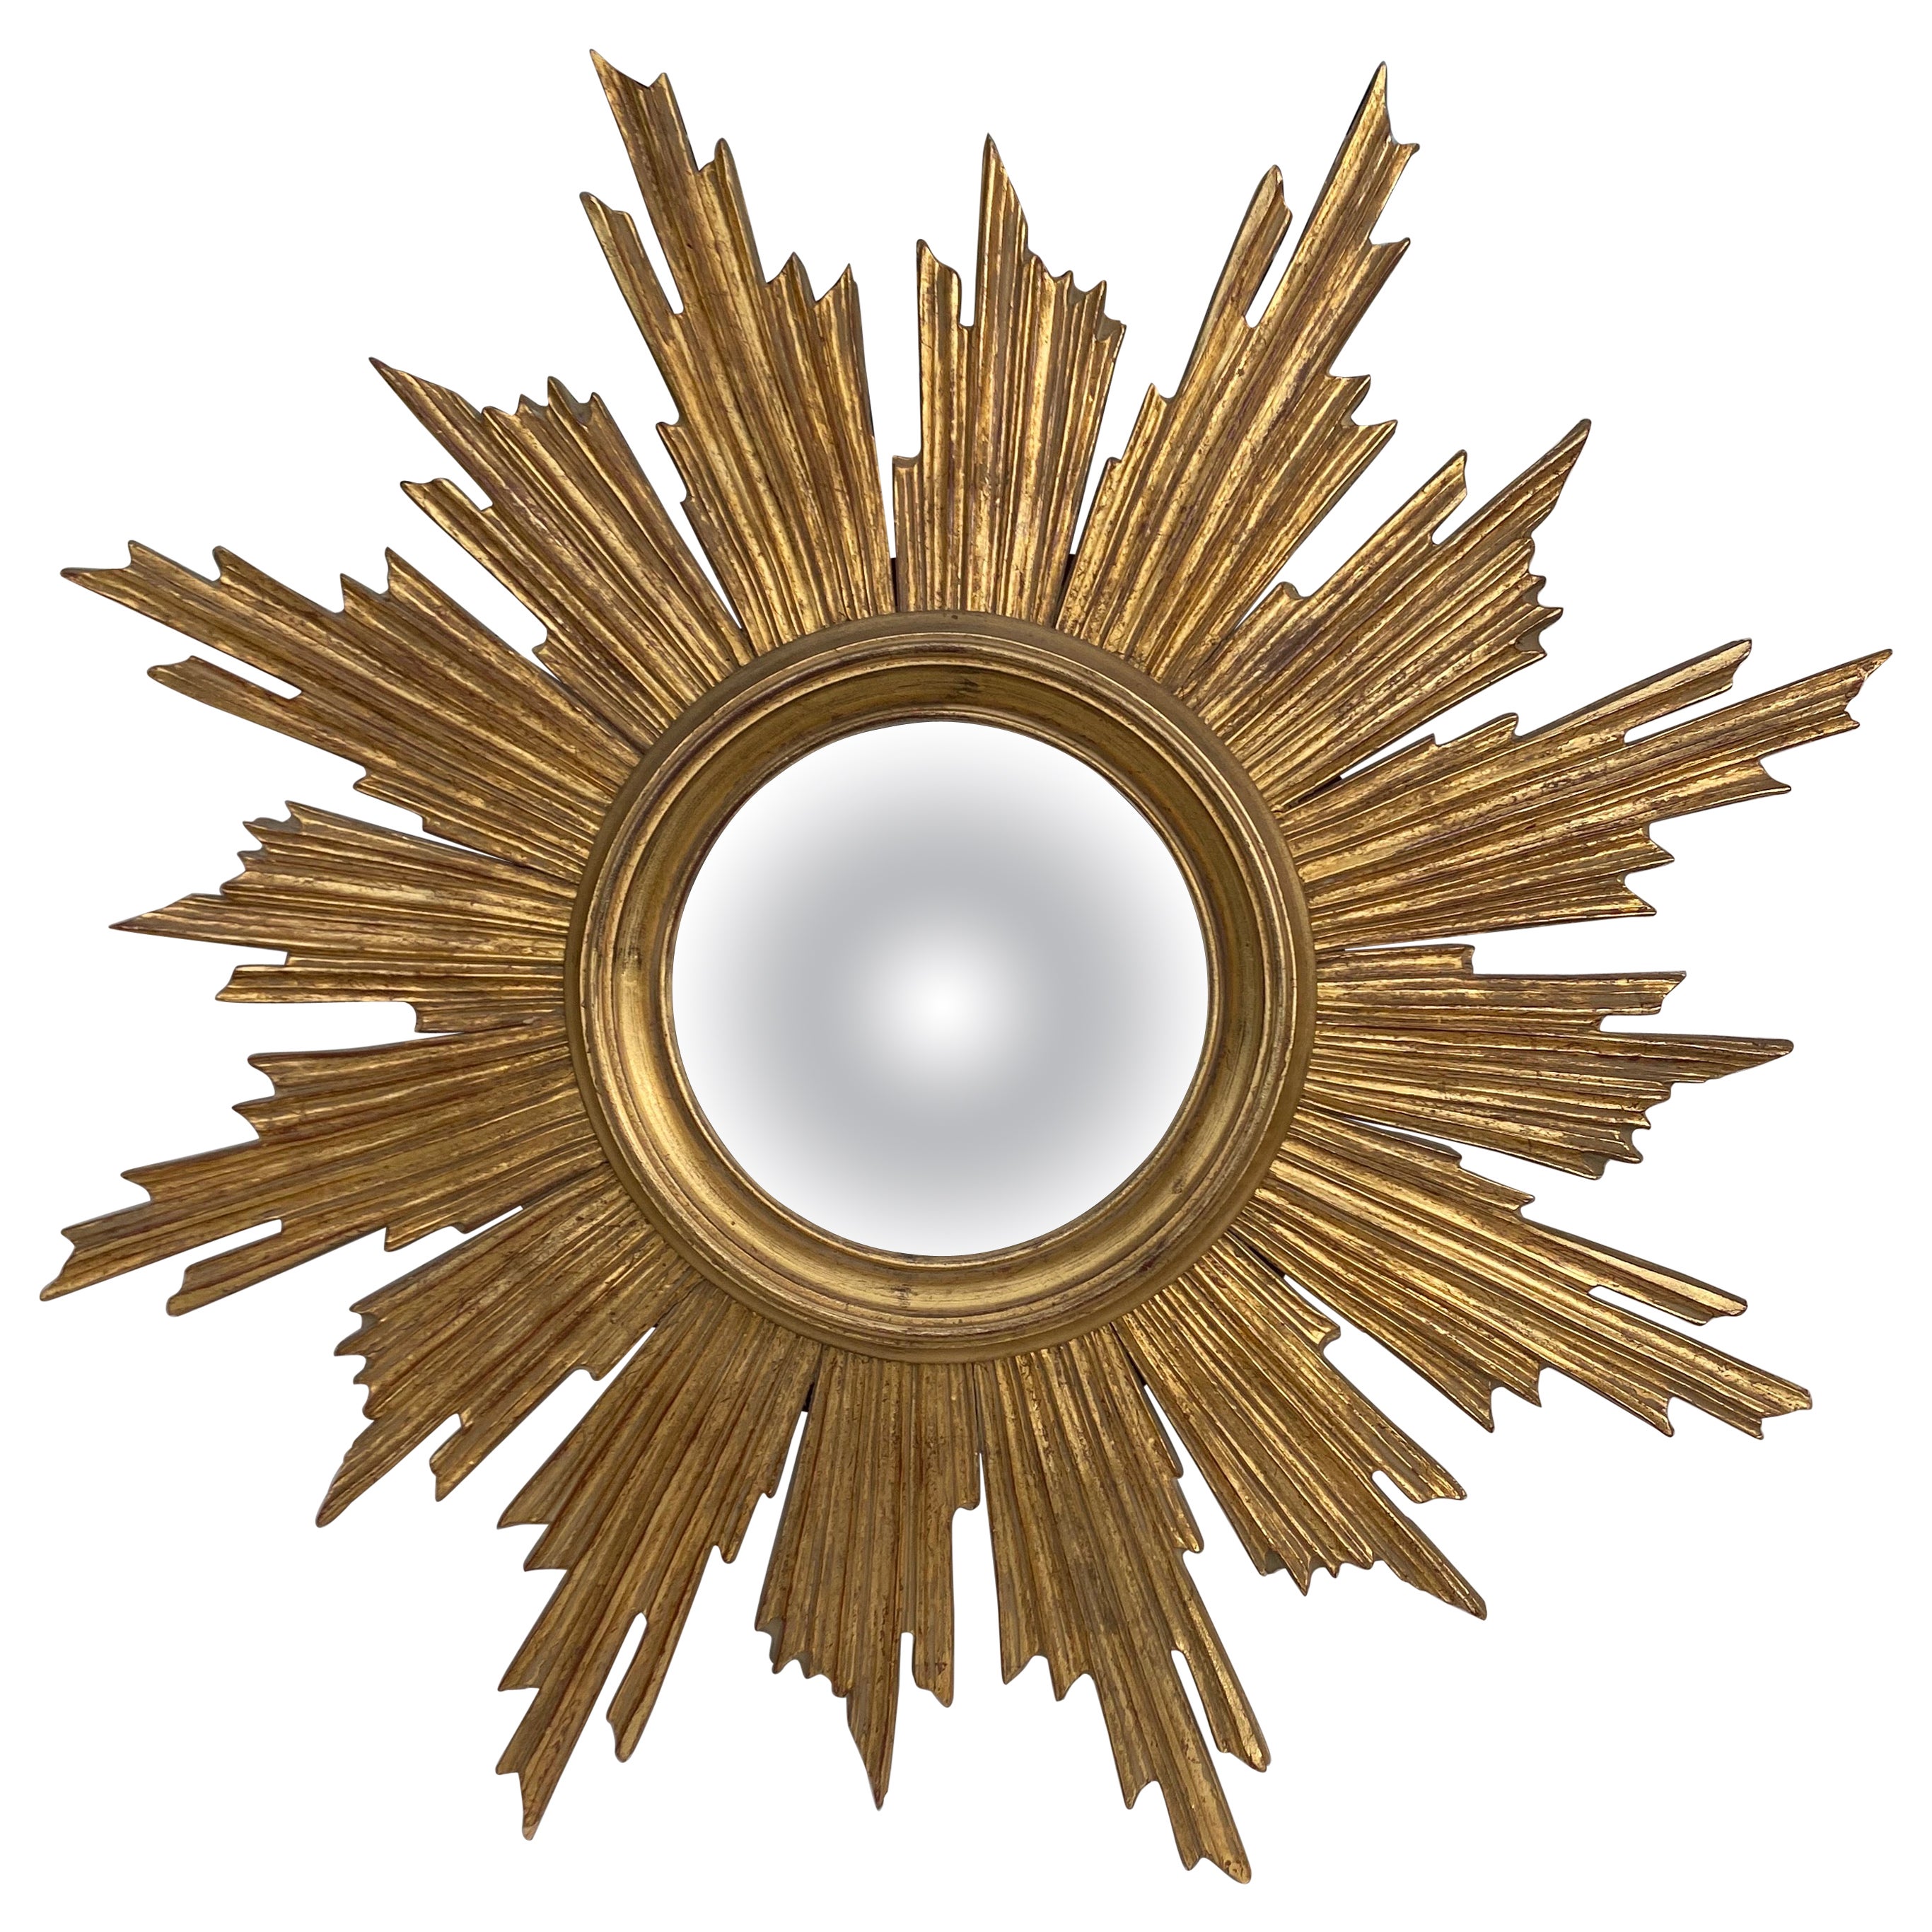 French Gilded Wood Convex Sunburst Mirror